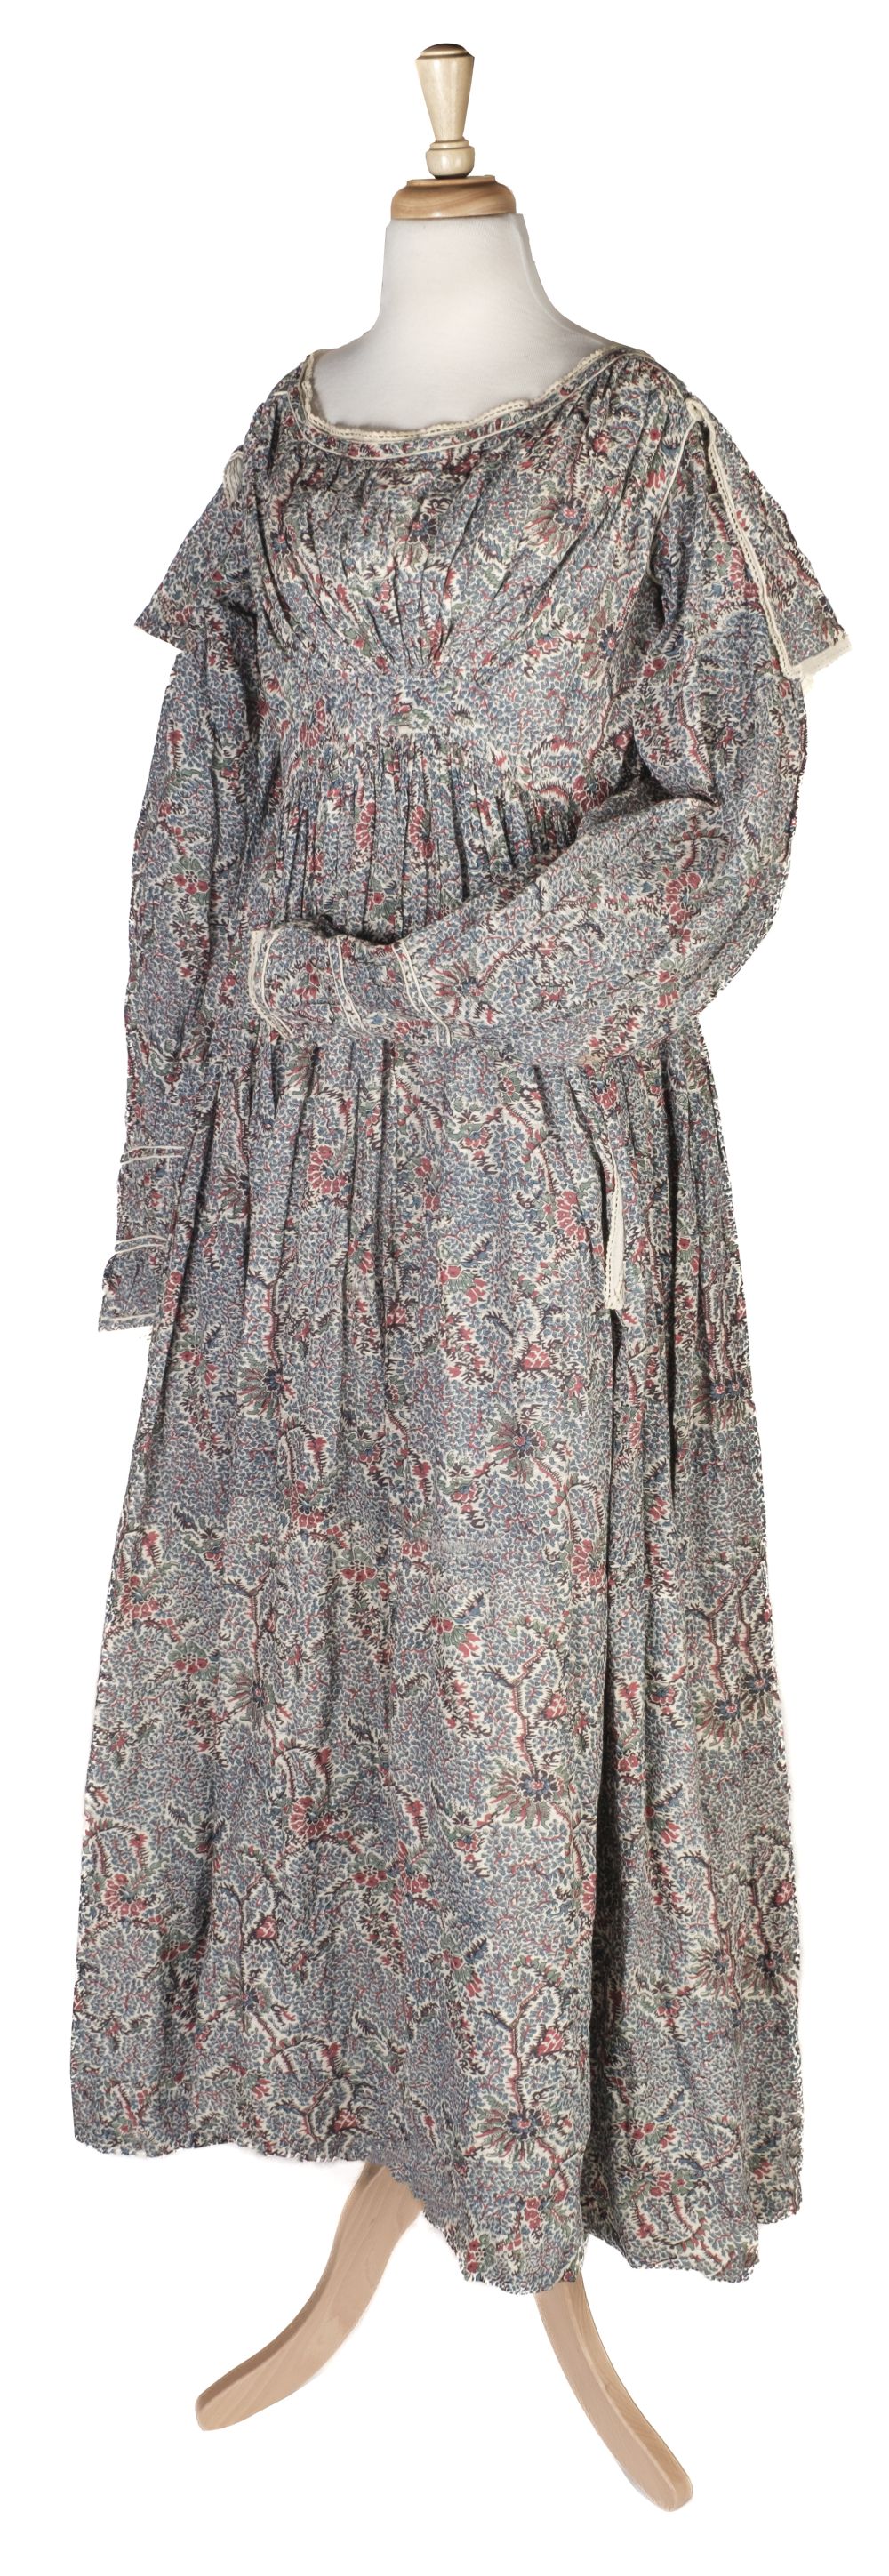 Clothing. A printed nursing gown, circa 1835